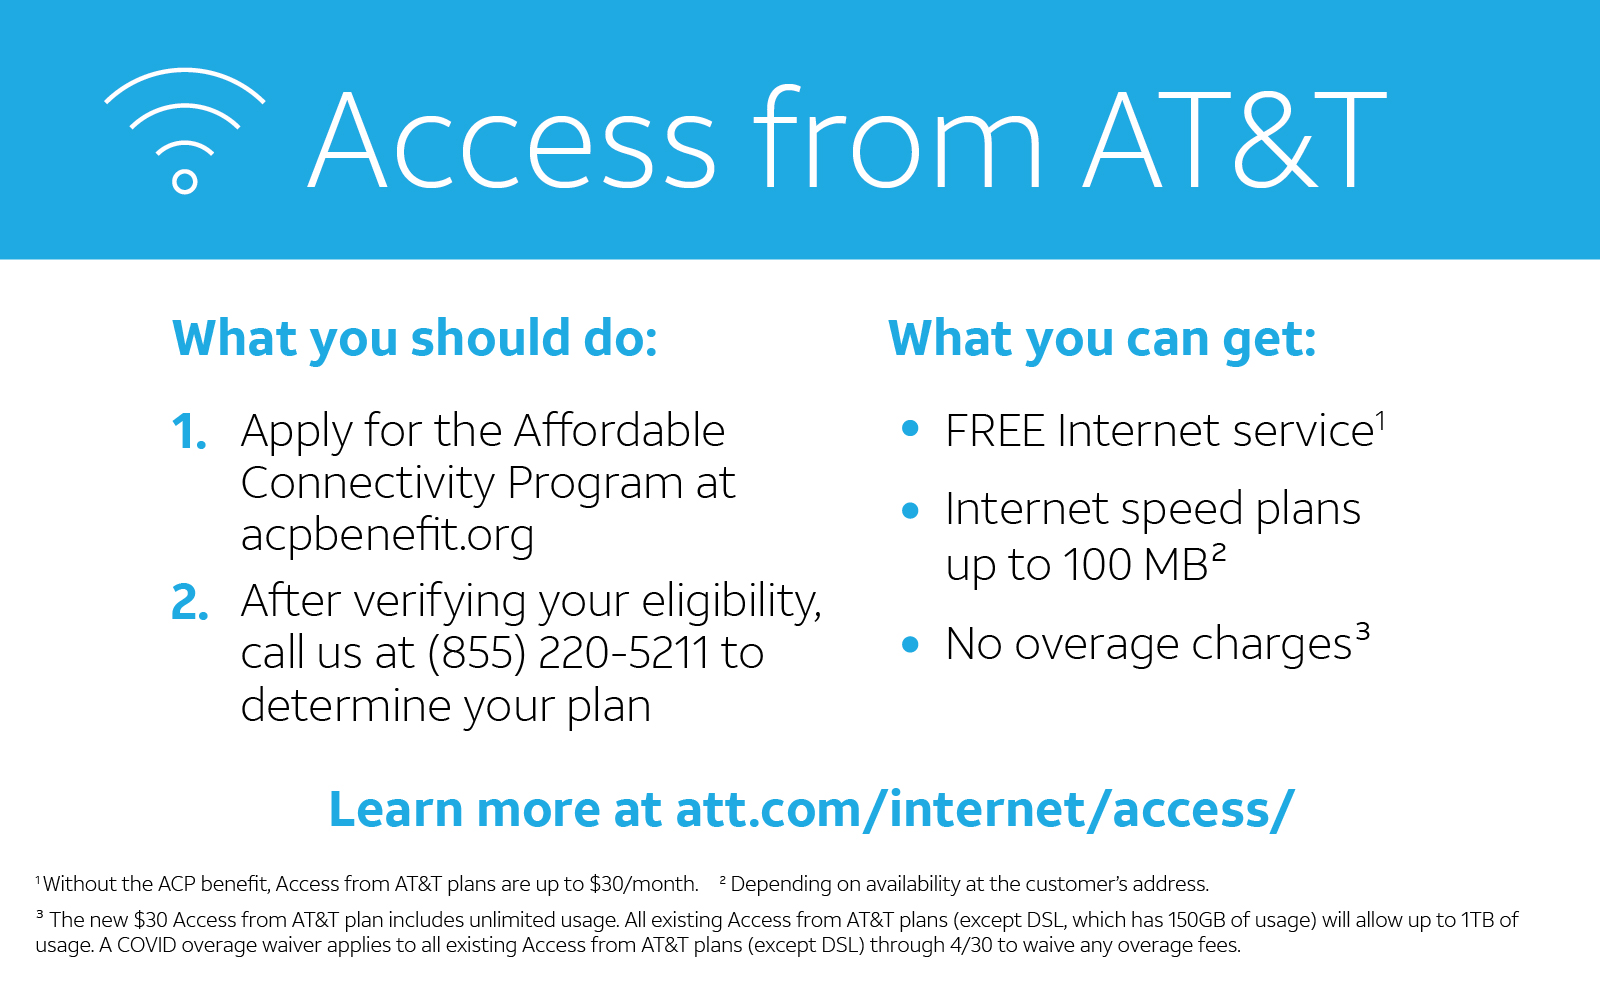 ATT Access 2.0 Infographic 01.31.22